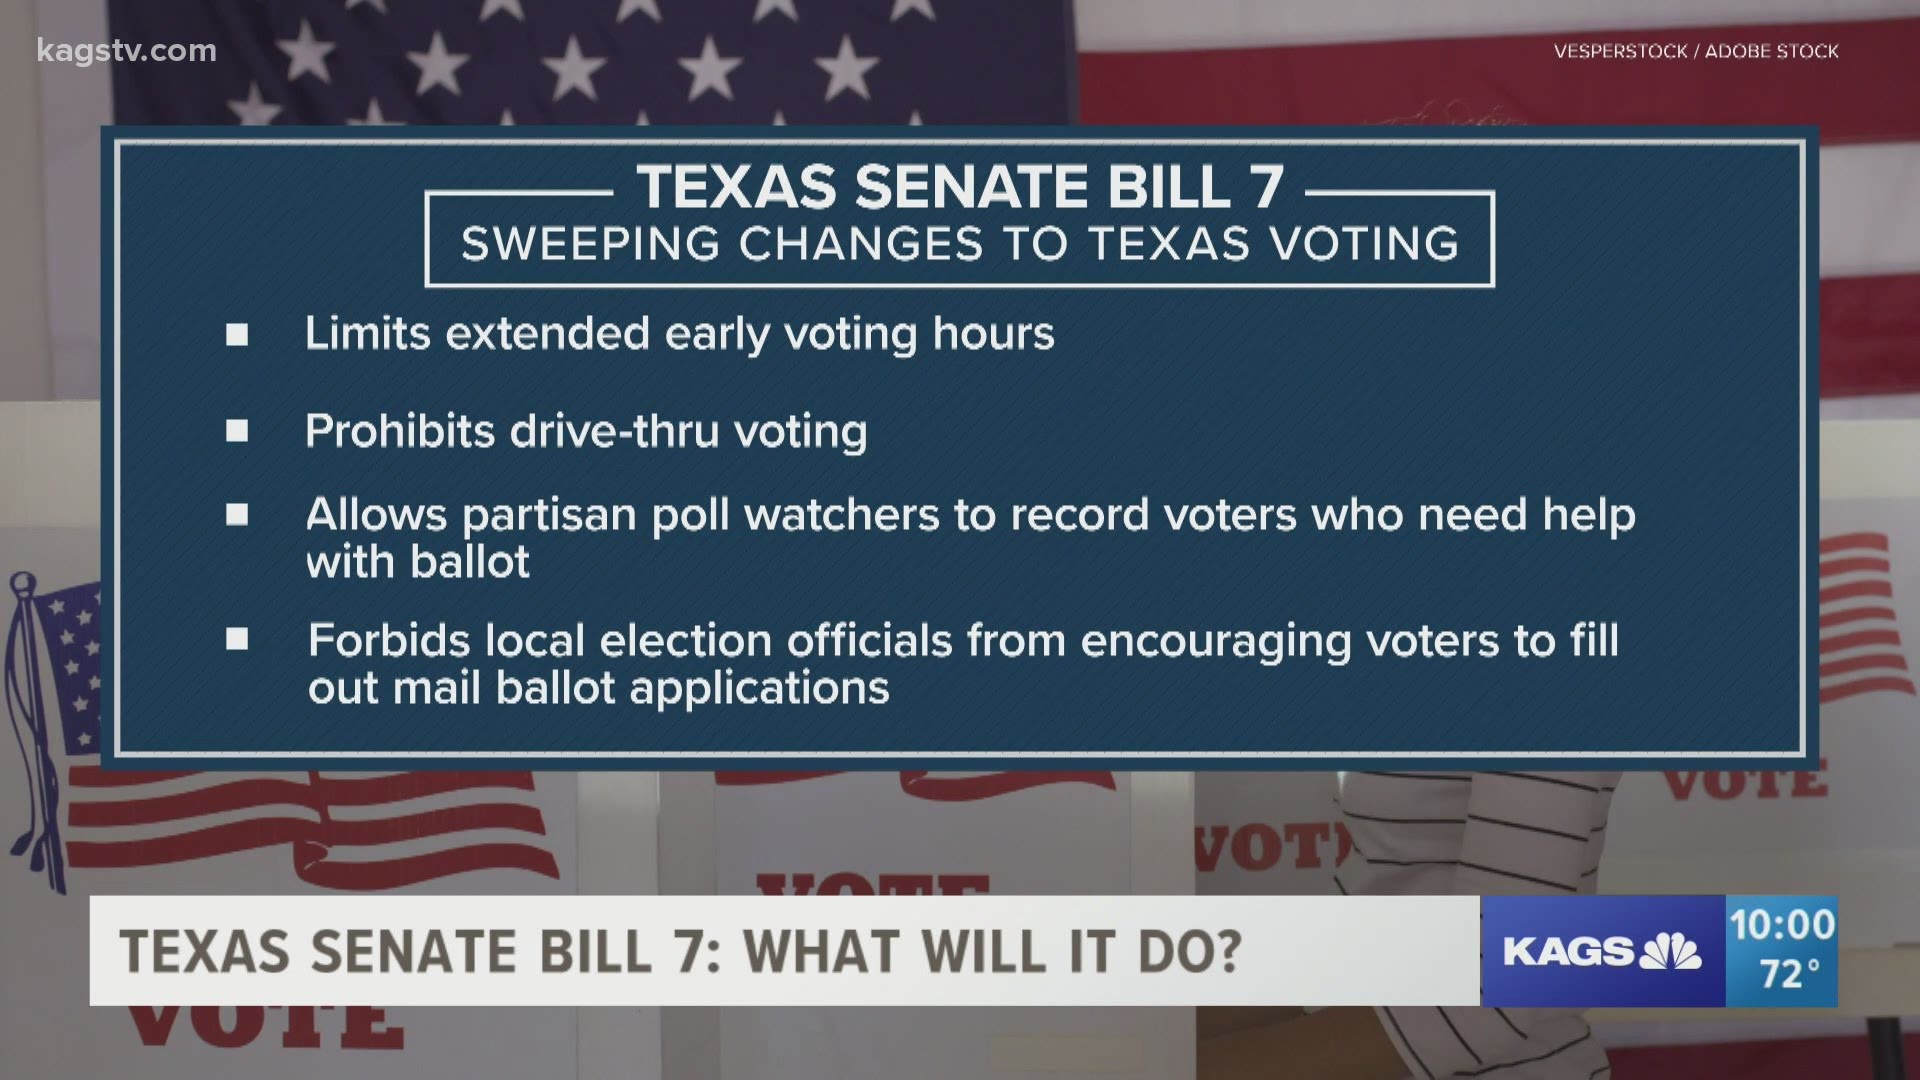 What Texas Senate Bill 7 will do